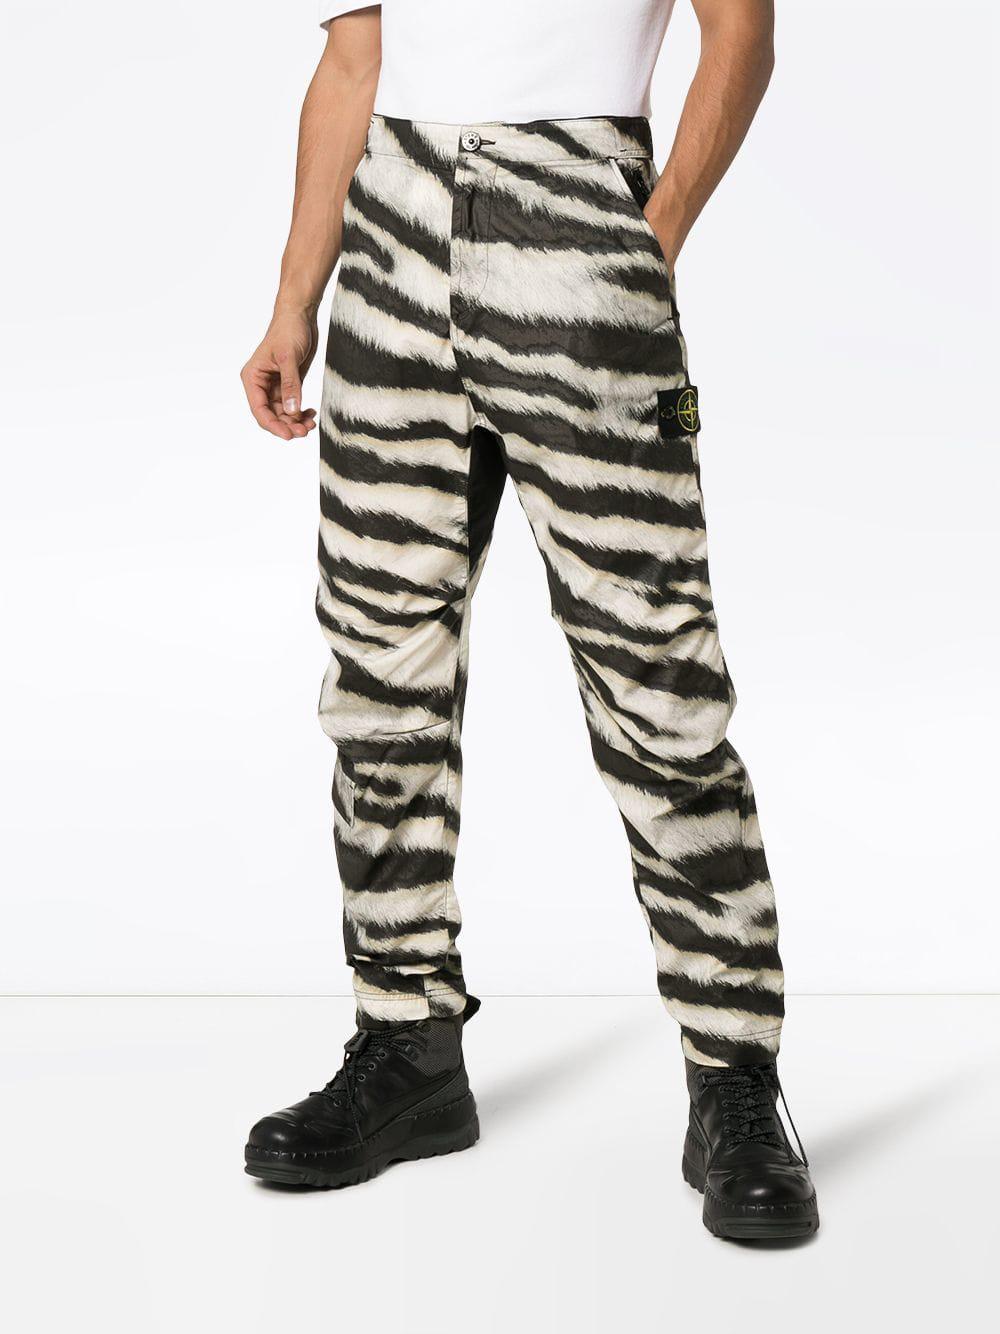 Zebra pants - gamingladeg